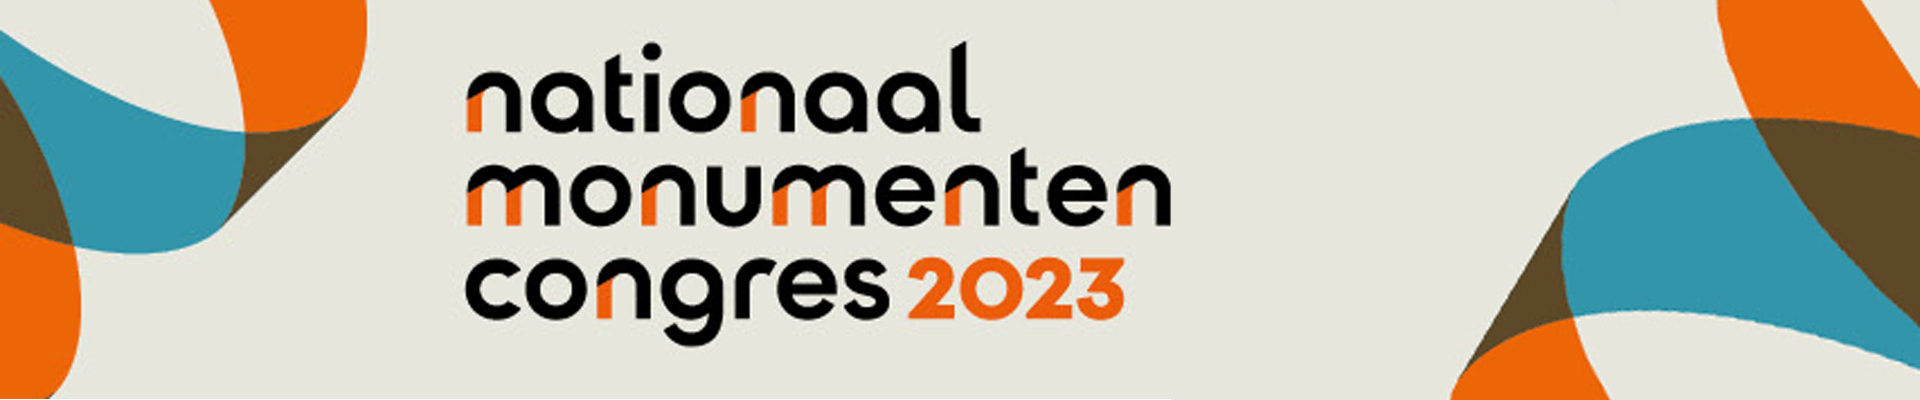 Nationaal Monumentencongres 2023